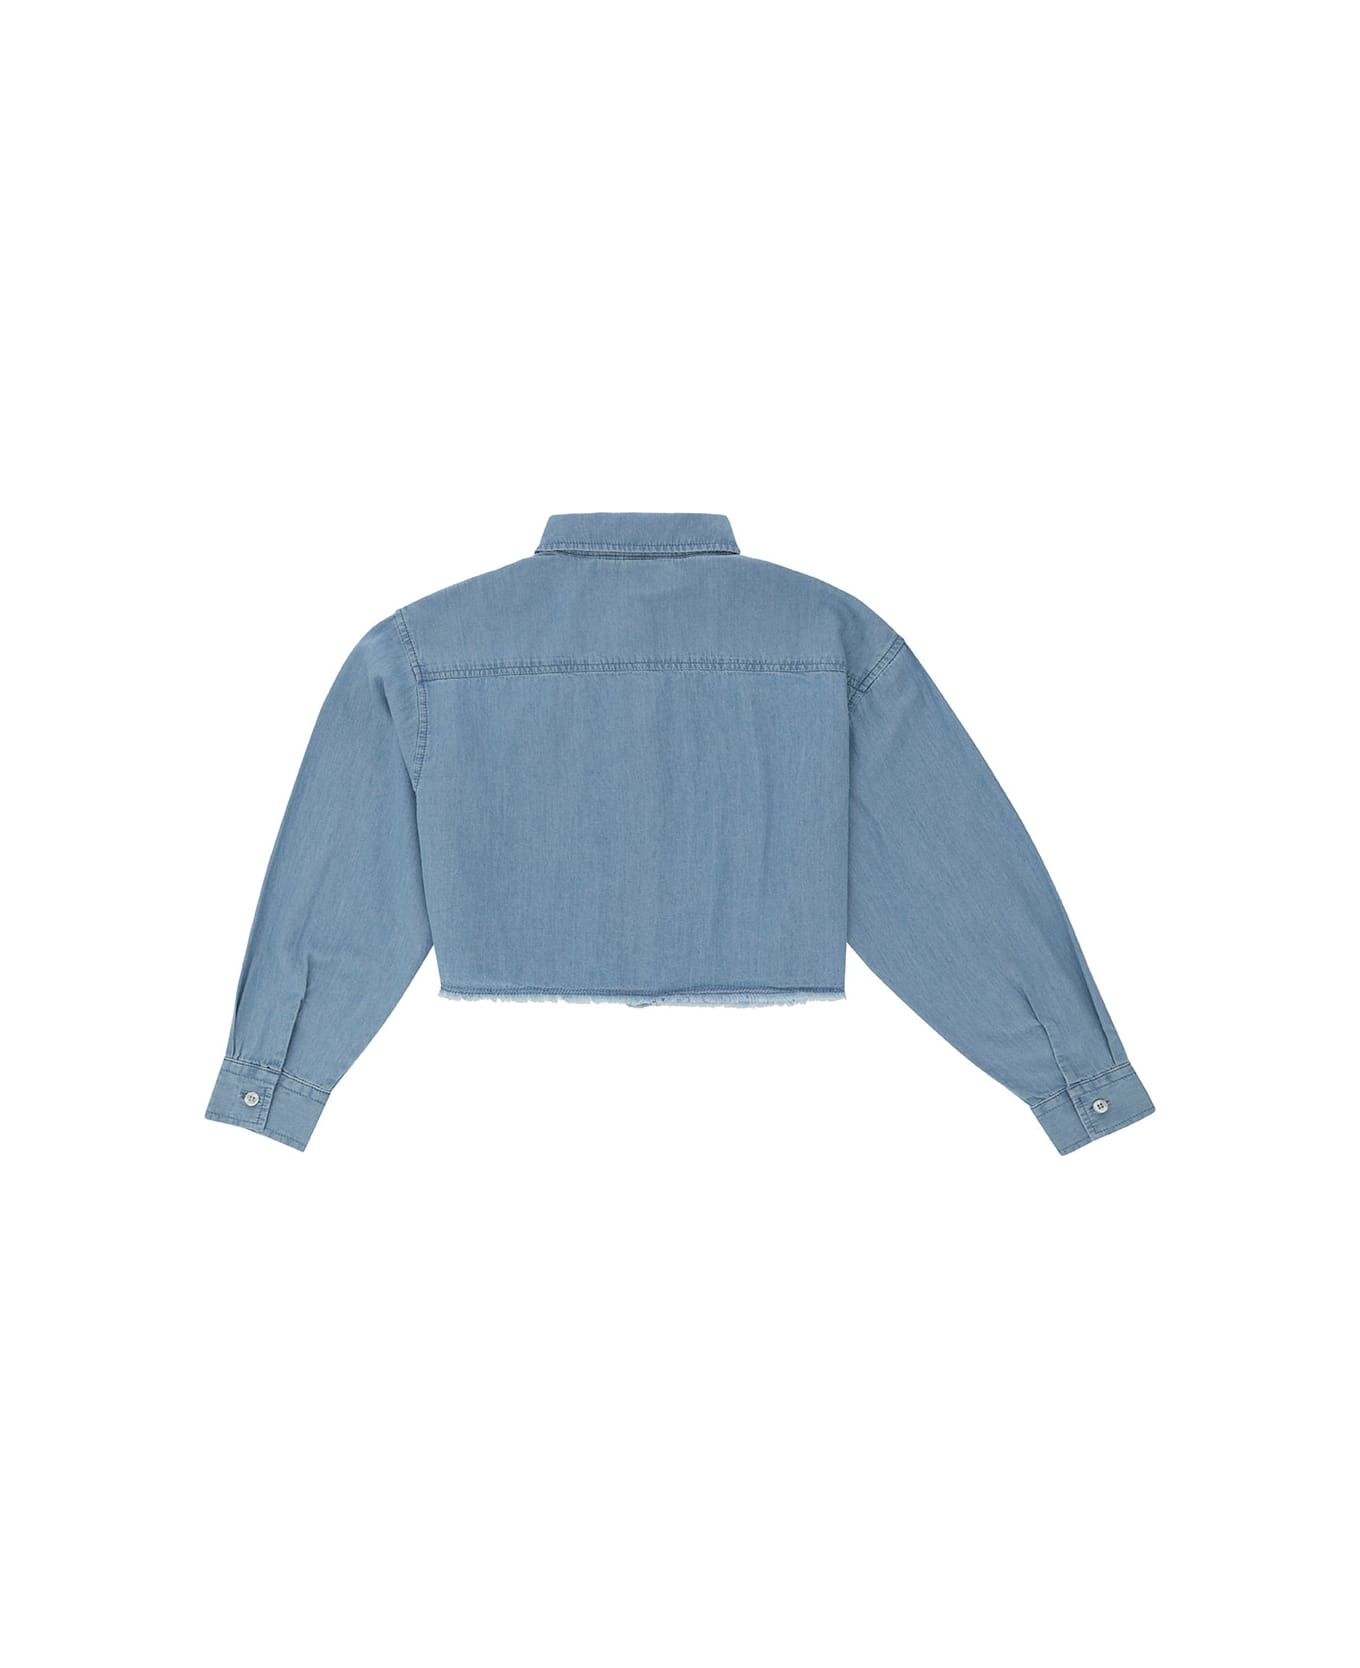 Aspesi Light Blue Crop Shirt With Logo Patch In Cotton Girl - Light blue シャツ